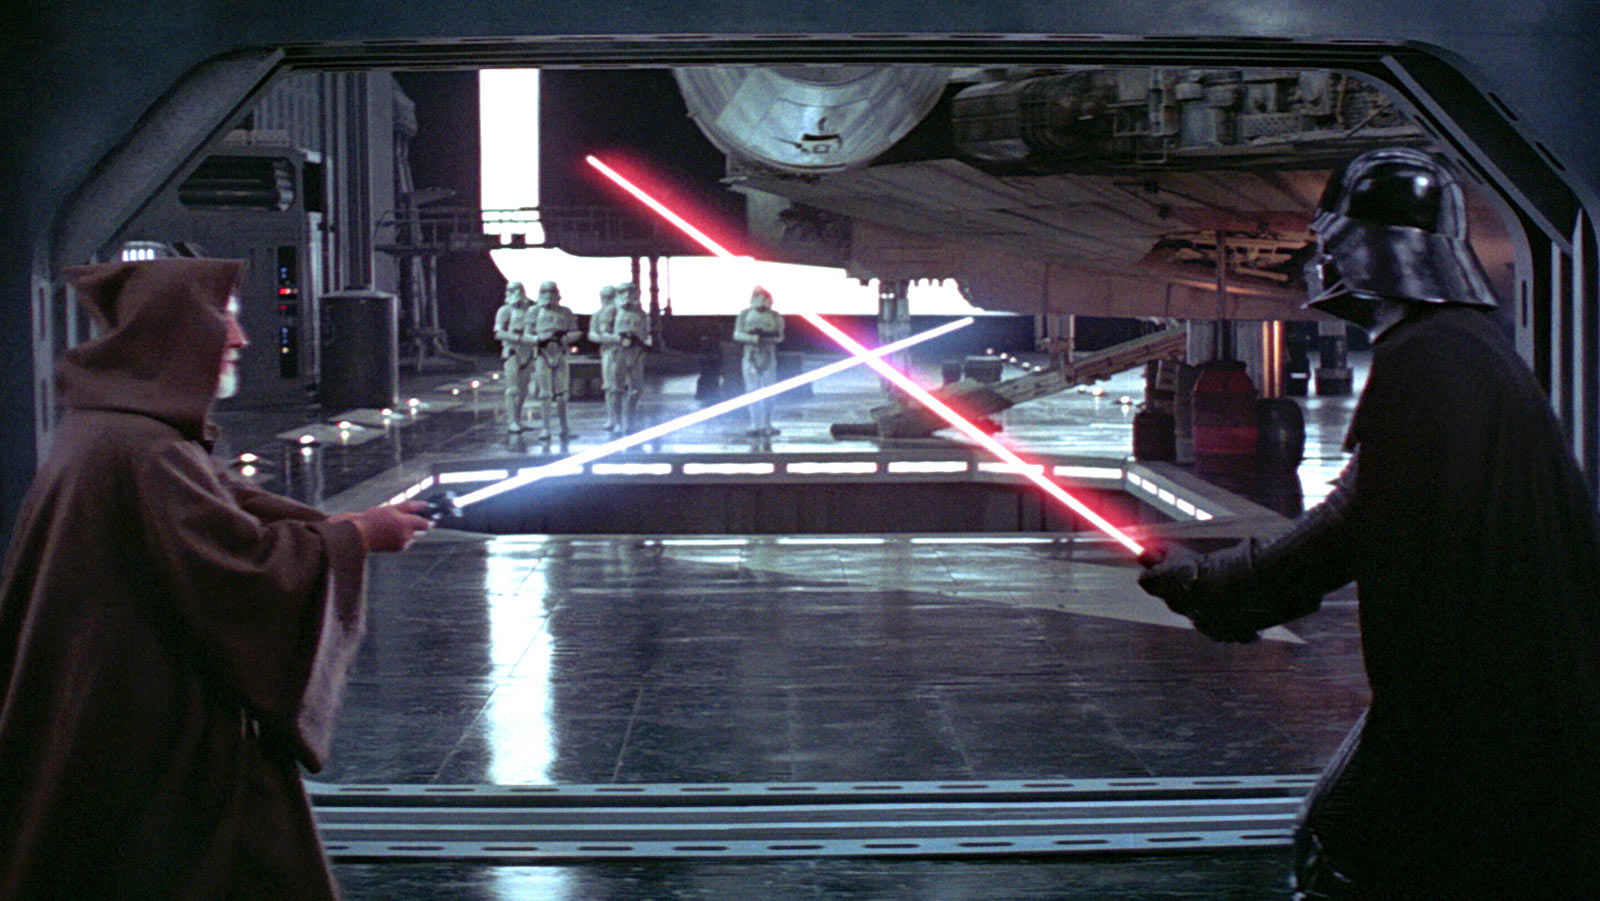 The showdown between Obi-Wan and Darth Vader